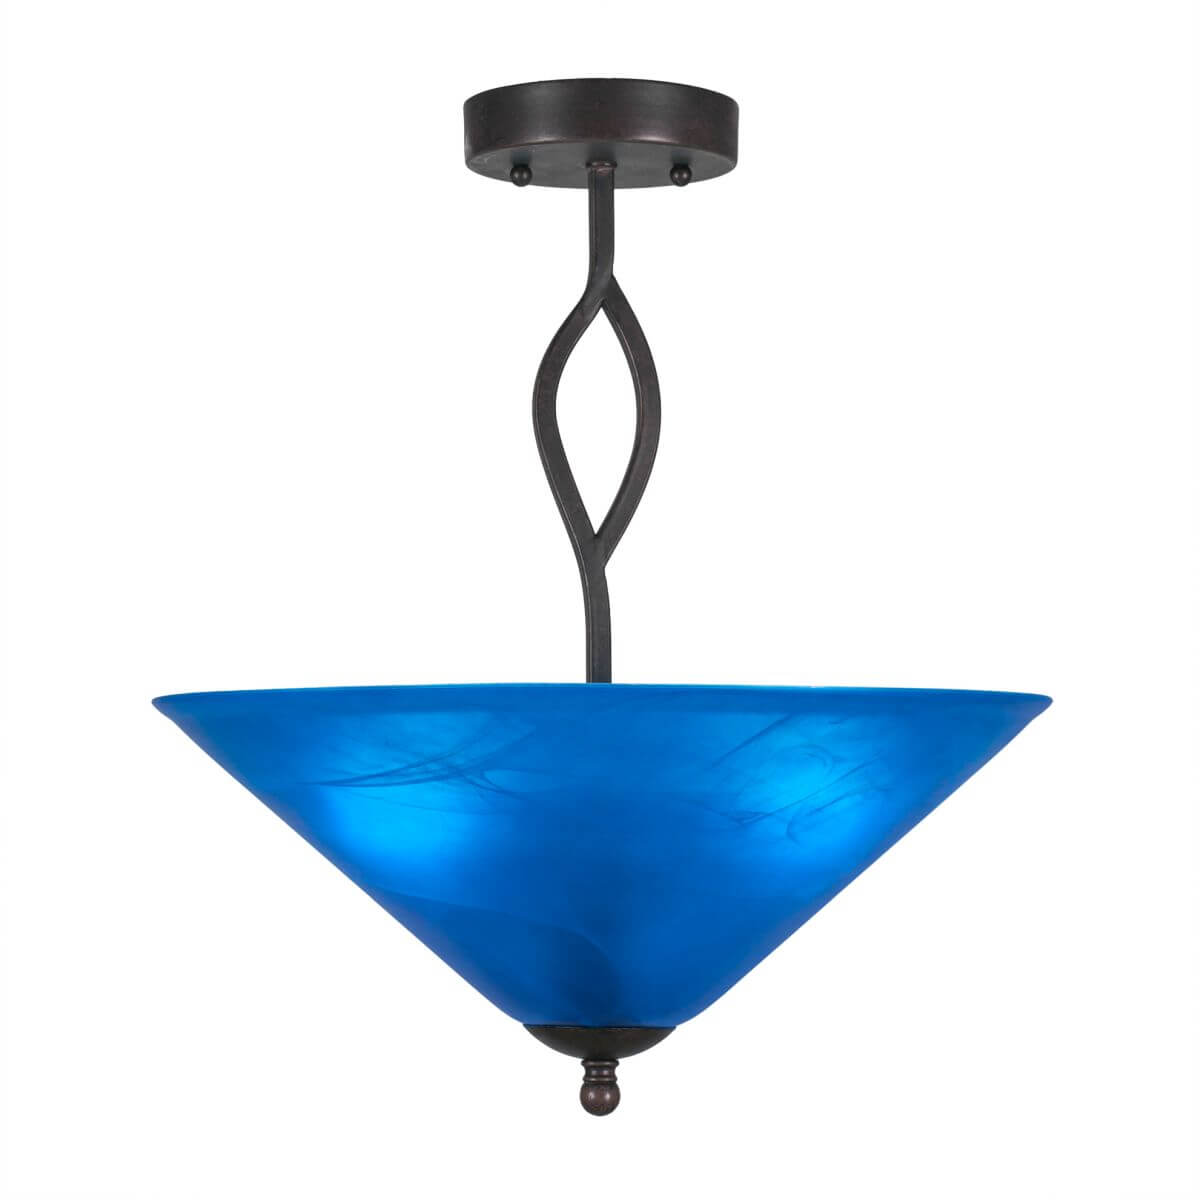 Toltec Lighting 242-DG-415 Revo 3 Light 16 inch Semi-Flush Mount in Dark Granite with 16 inch Blue Italian Glass